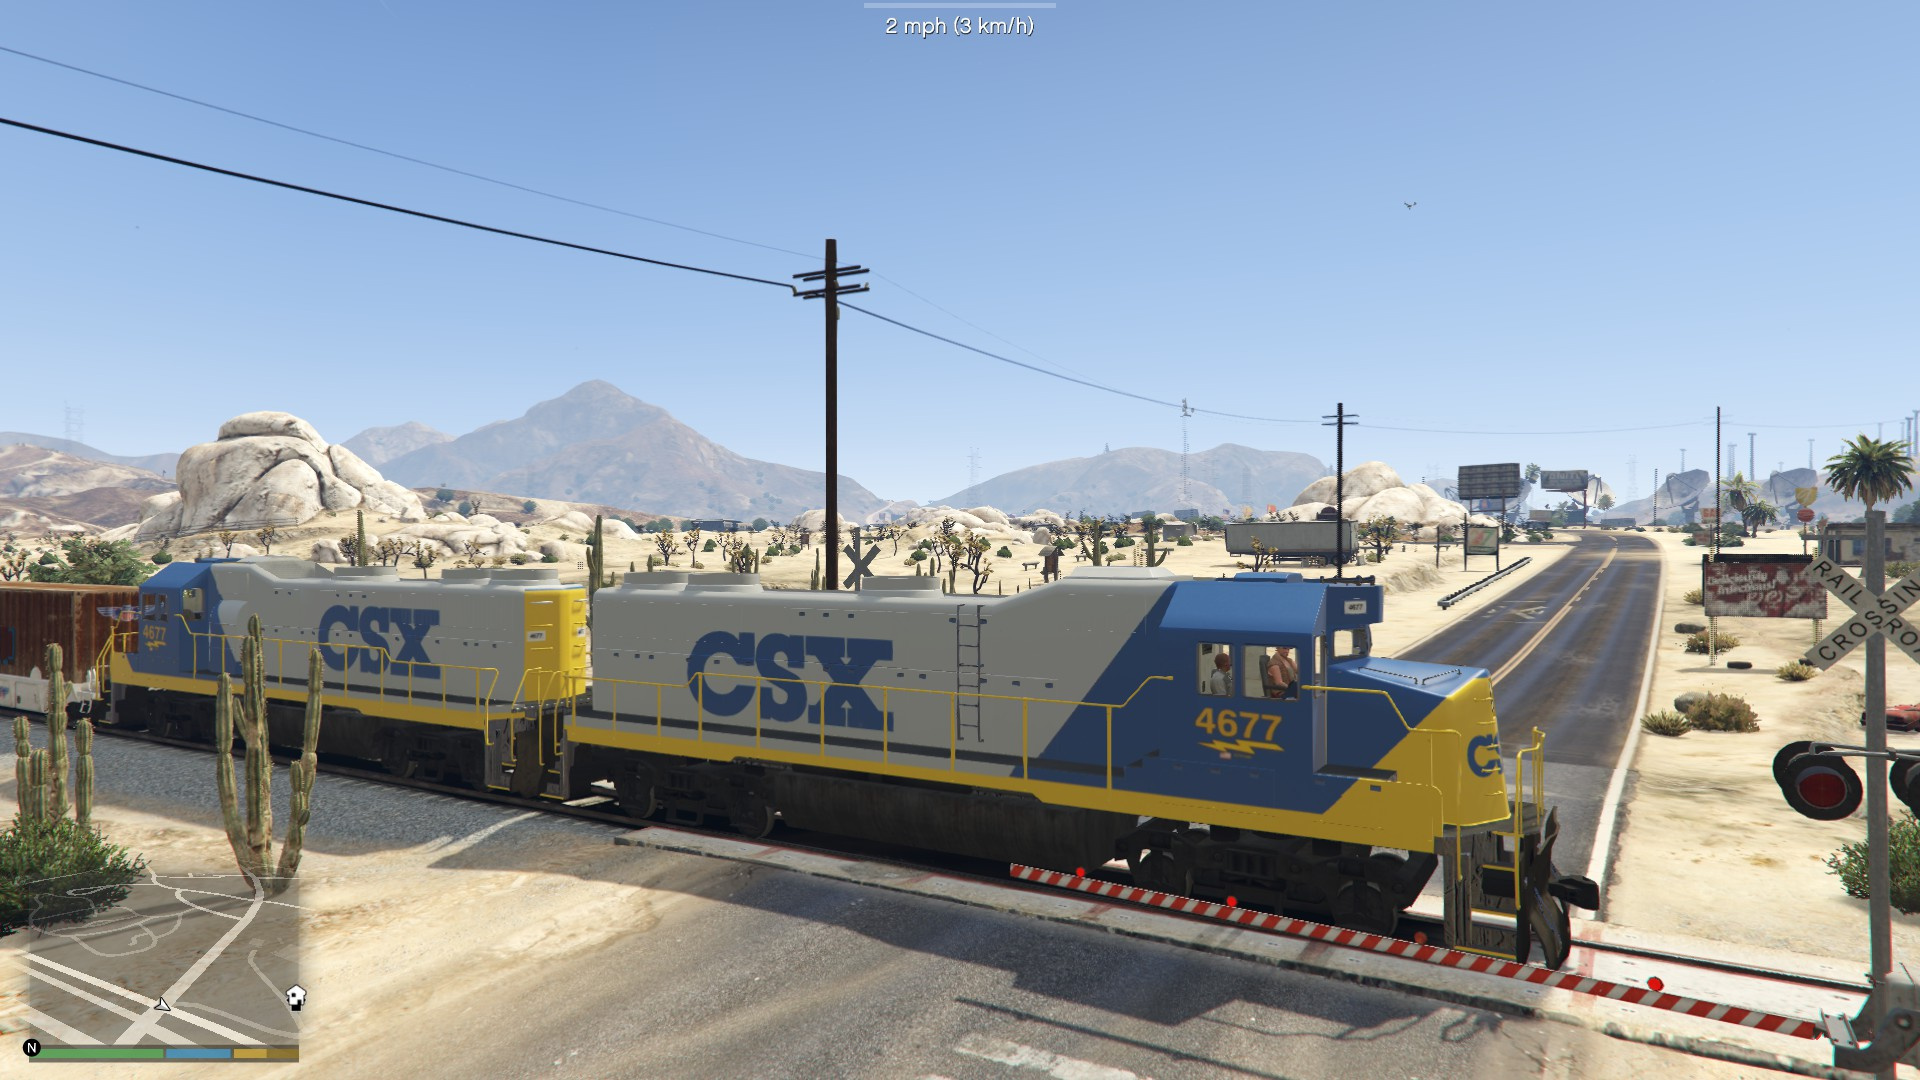 Gta 5 train sd40 mods